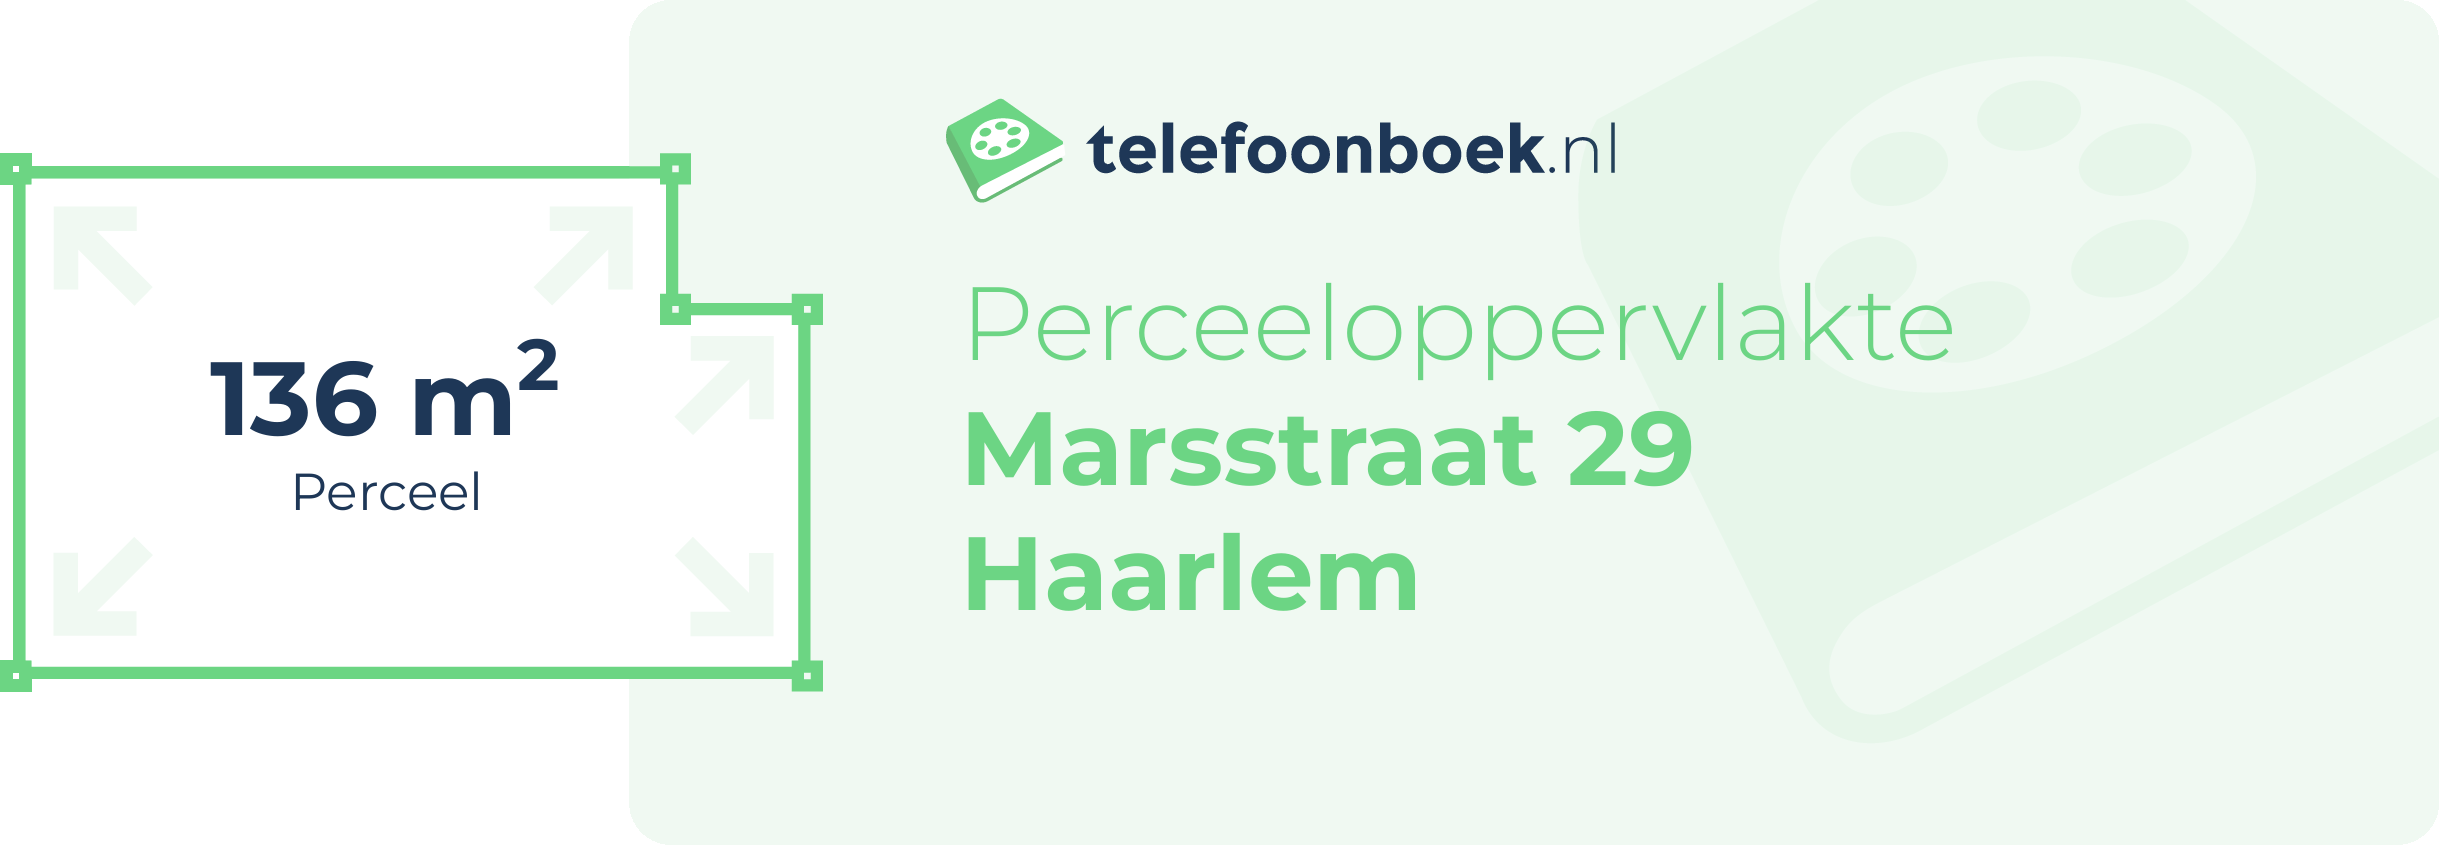 Perceeloppervlakte Marsstraat 29 Haarlem